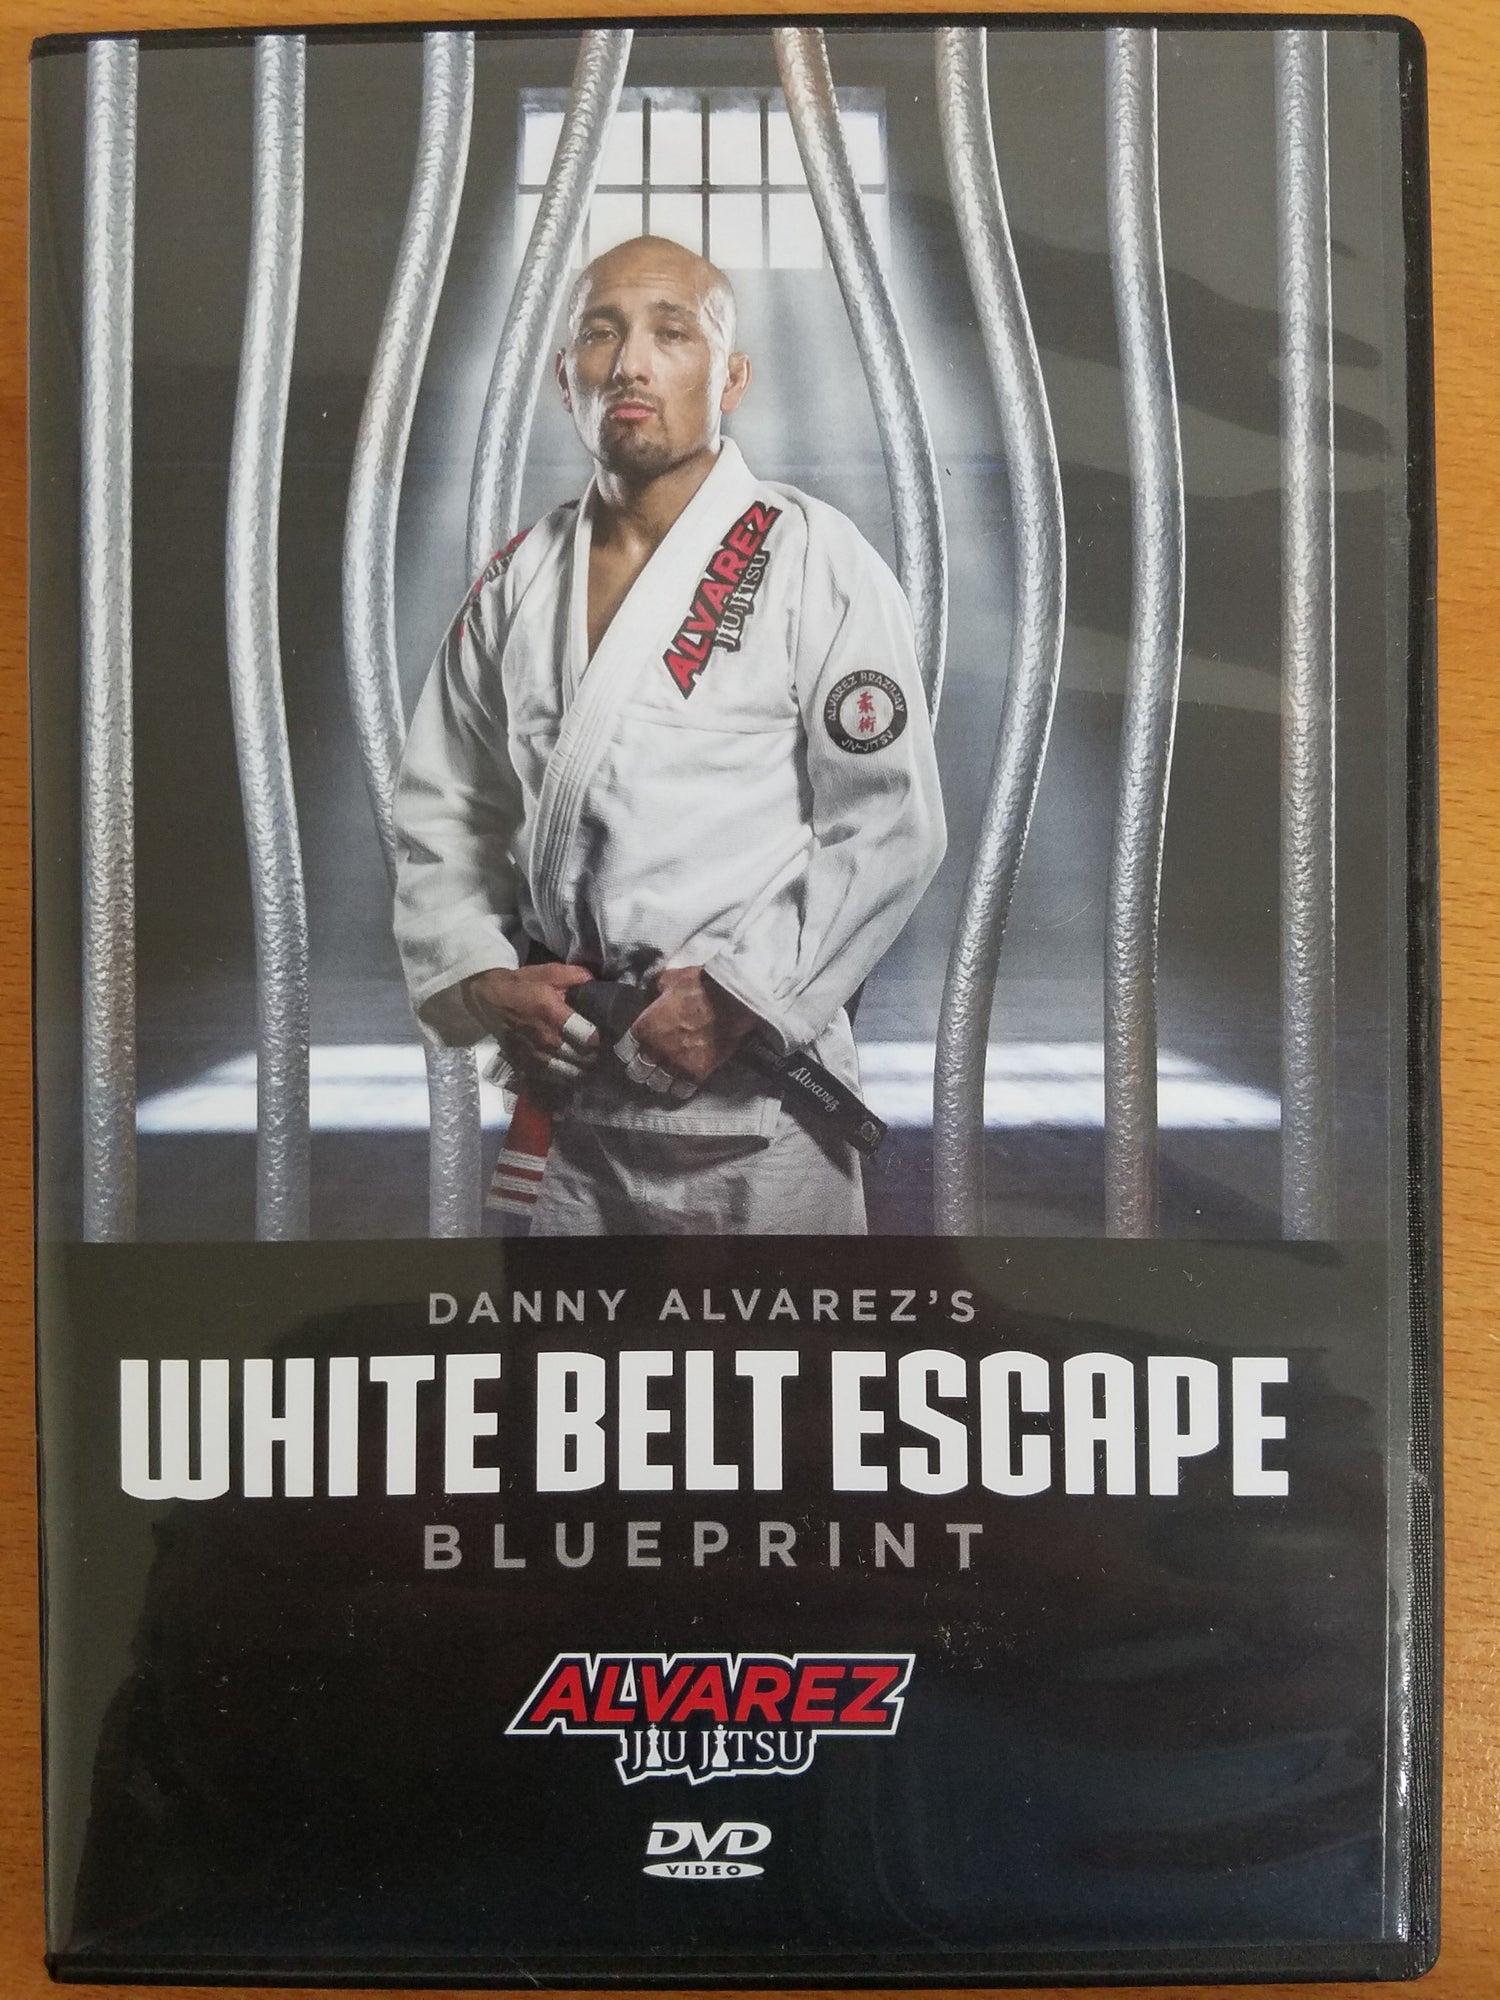 White Belt Escape Blueprint 4 DVD Set by Danny Alvarez - Budovideos Inc